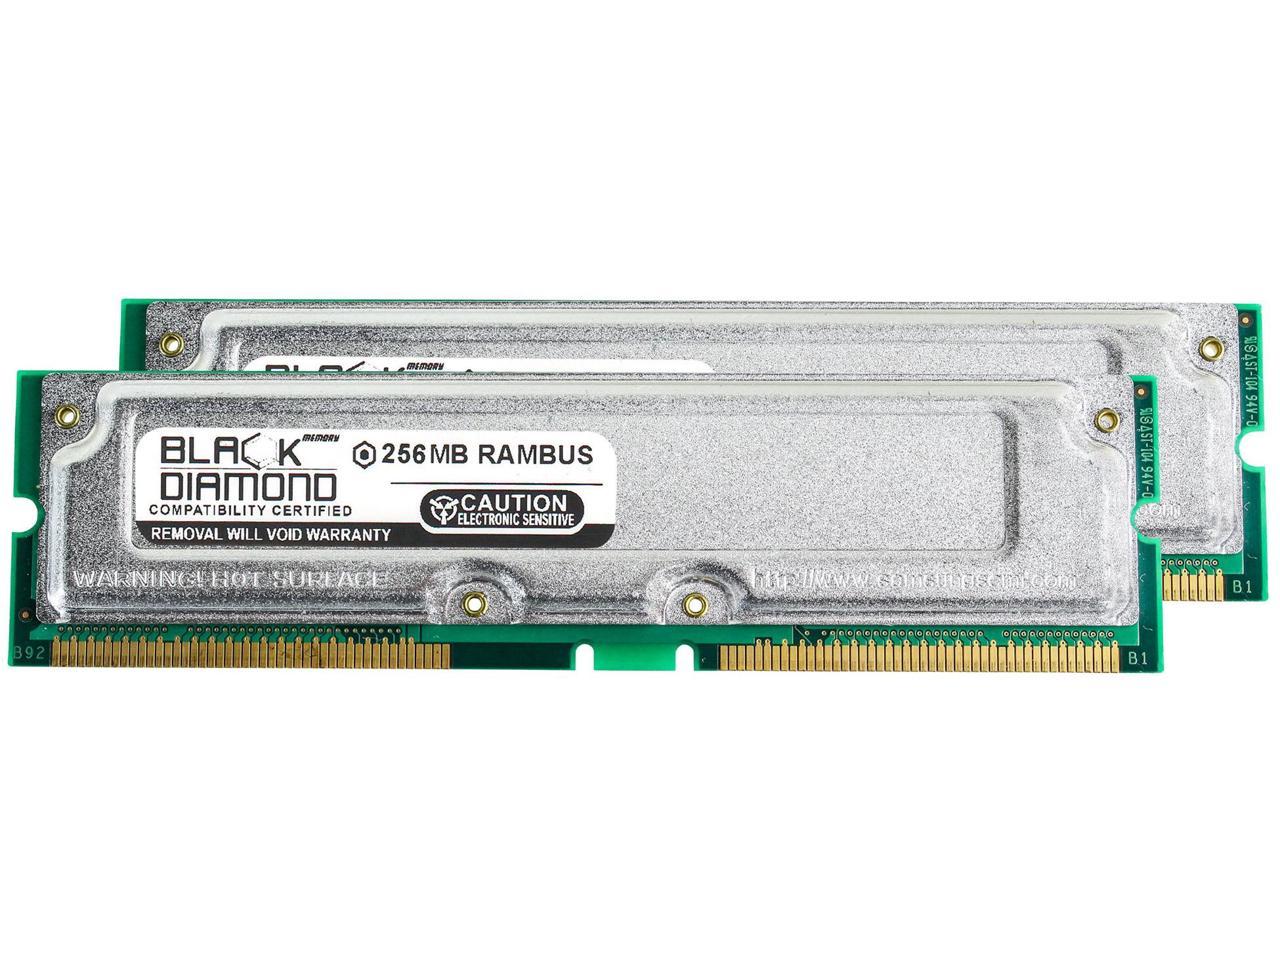 2GB 2X1GB RAM Memory for HP Pavilion Media Center PC a1268c DDR2 DIMM 240pin PC2-4200 533MHz Black Diamond Memory Module Upgrade 